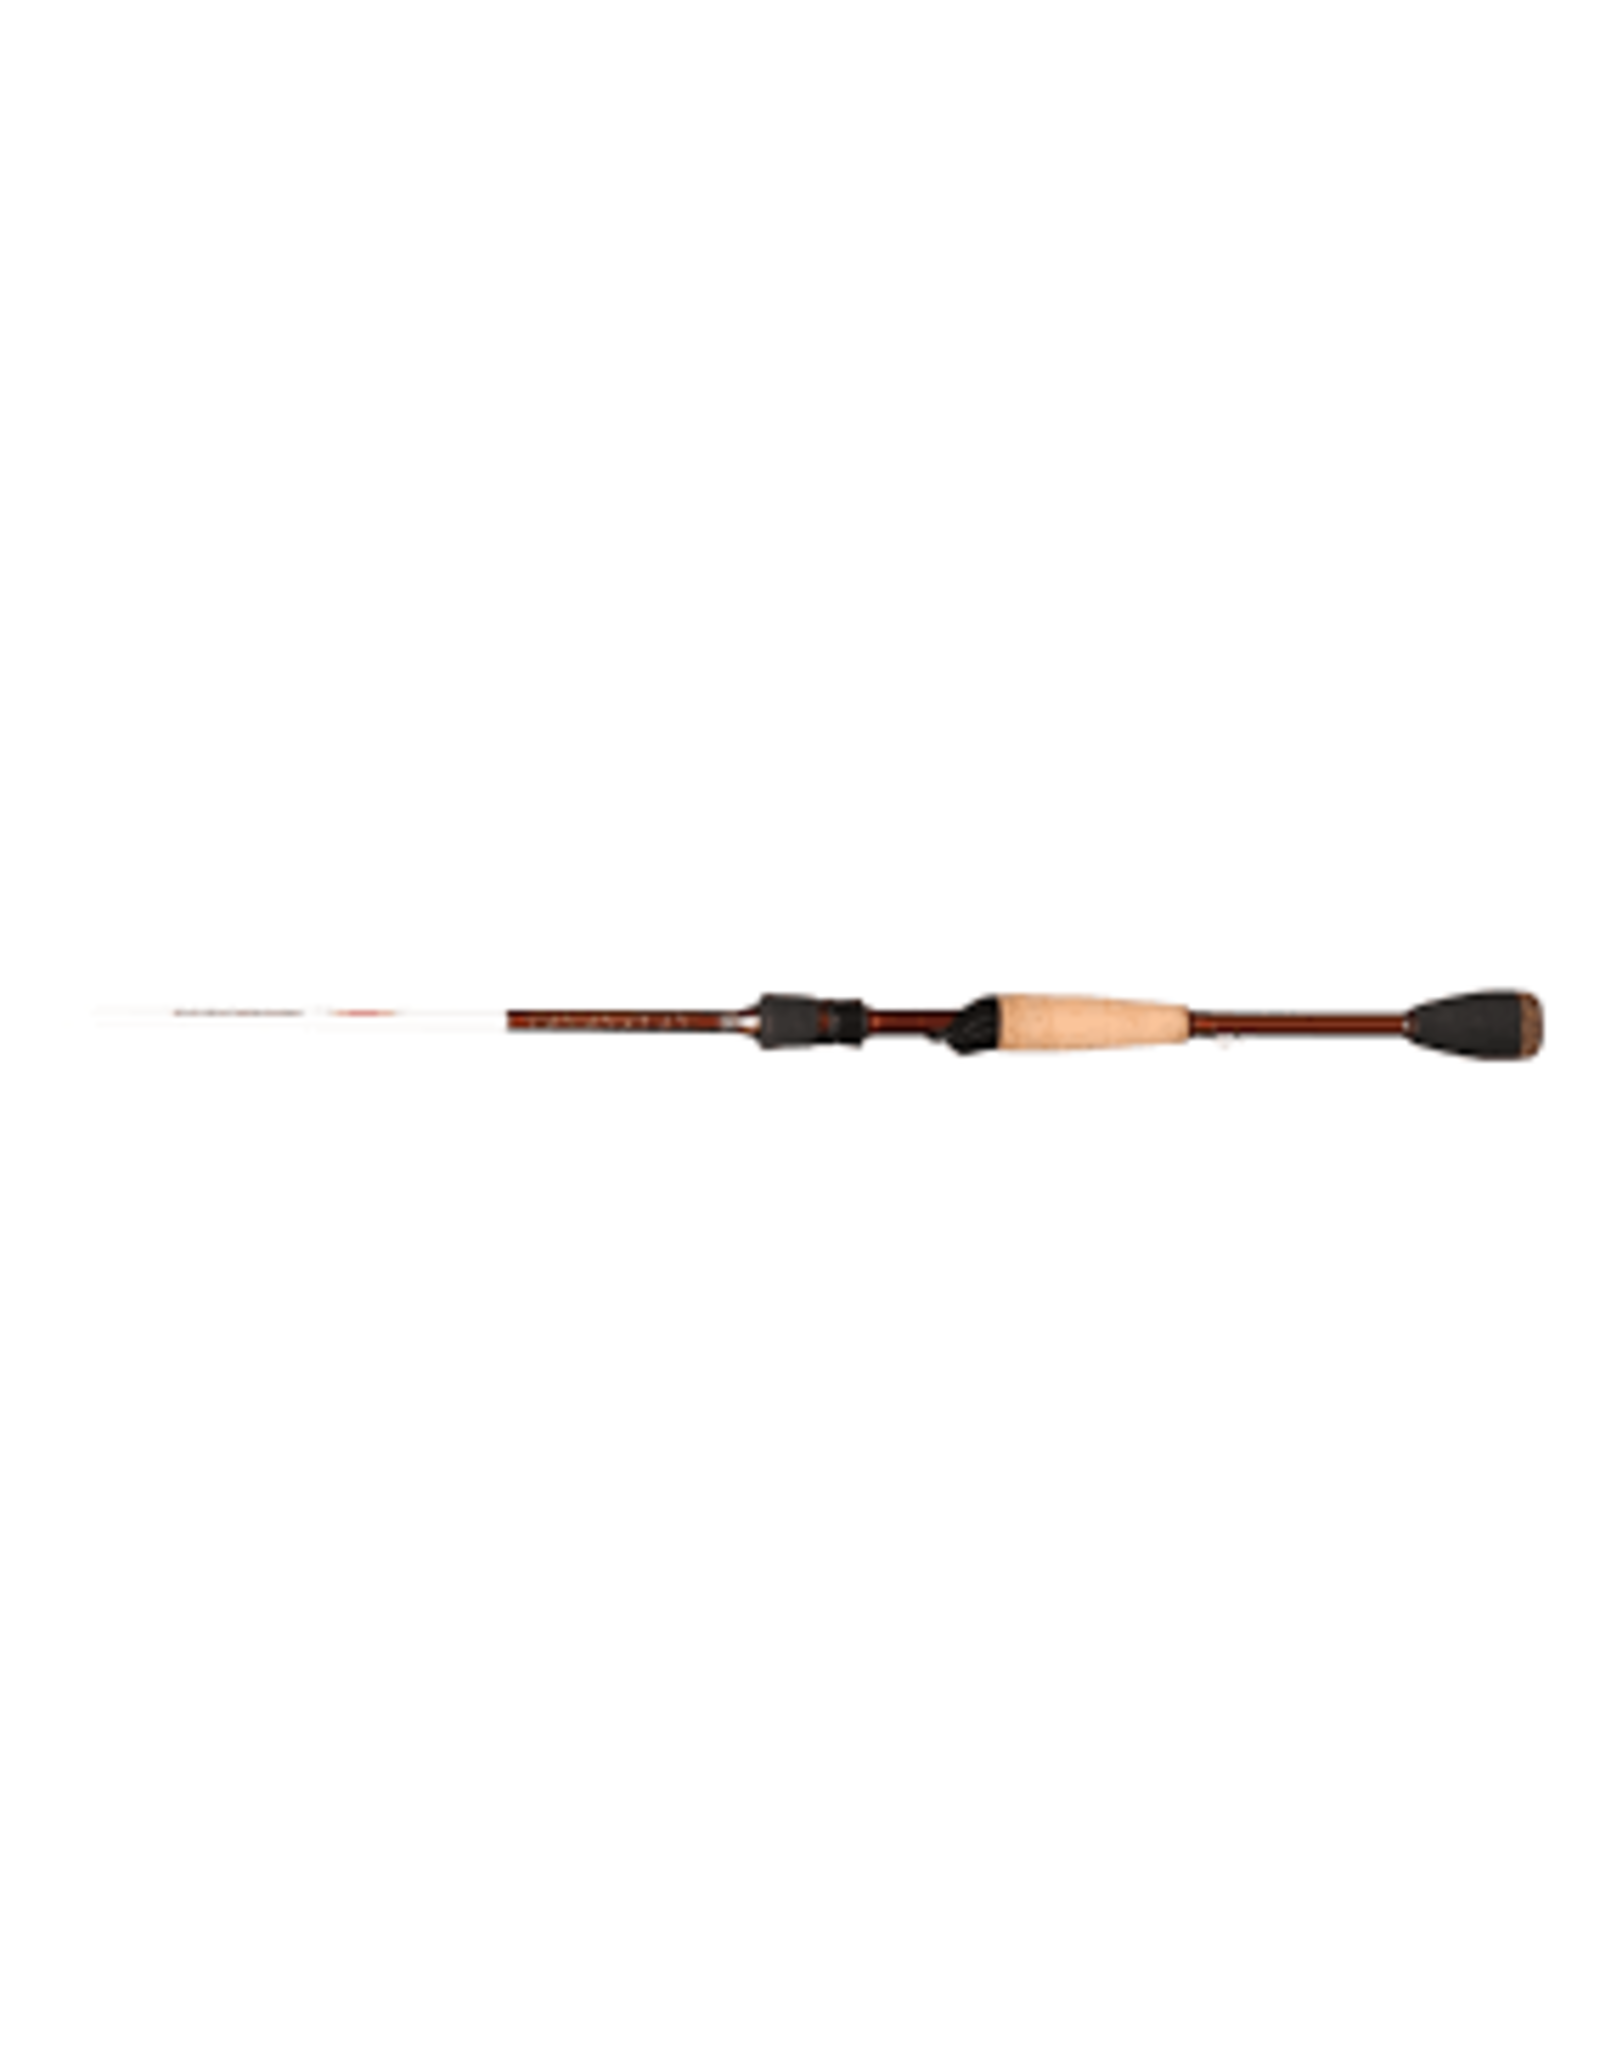 Duckett Fishing Walleye Series Spinning Rods, Med, White, 7ft, DFWE70M-S -  Bronson